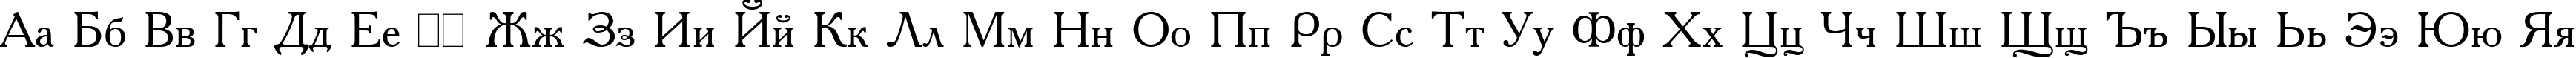 Пример написания русского алфавита шрифтом Academia Plain: